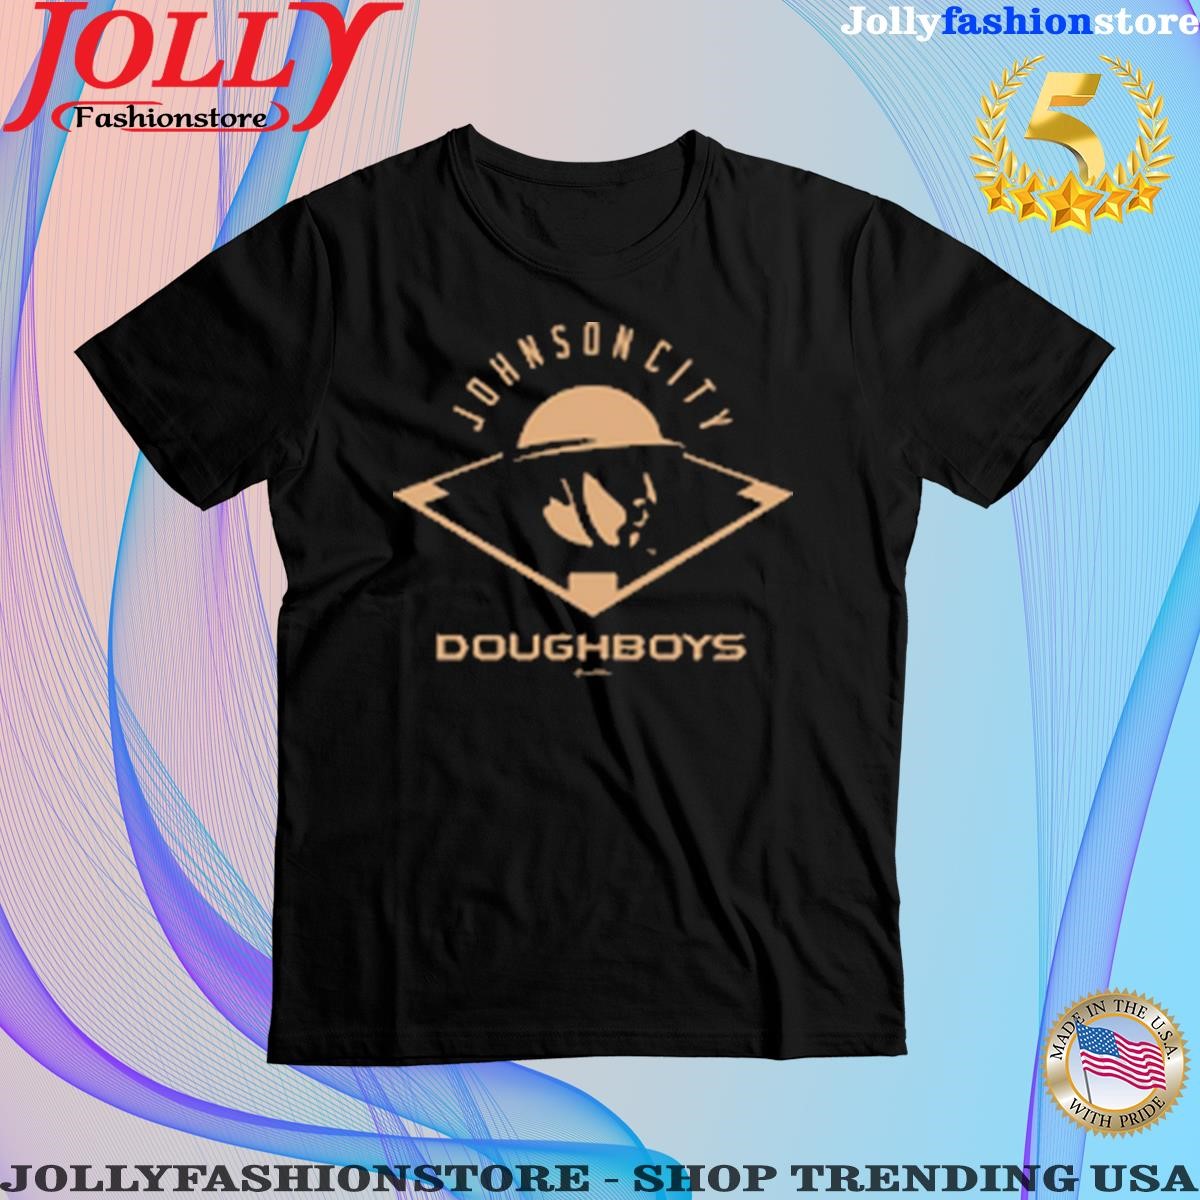 Trending johnson city doughboys Shirt